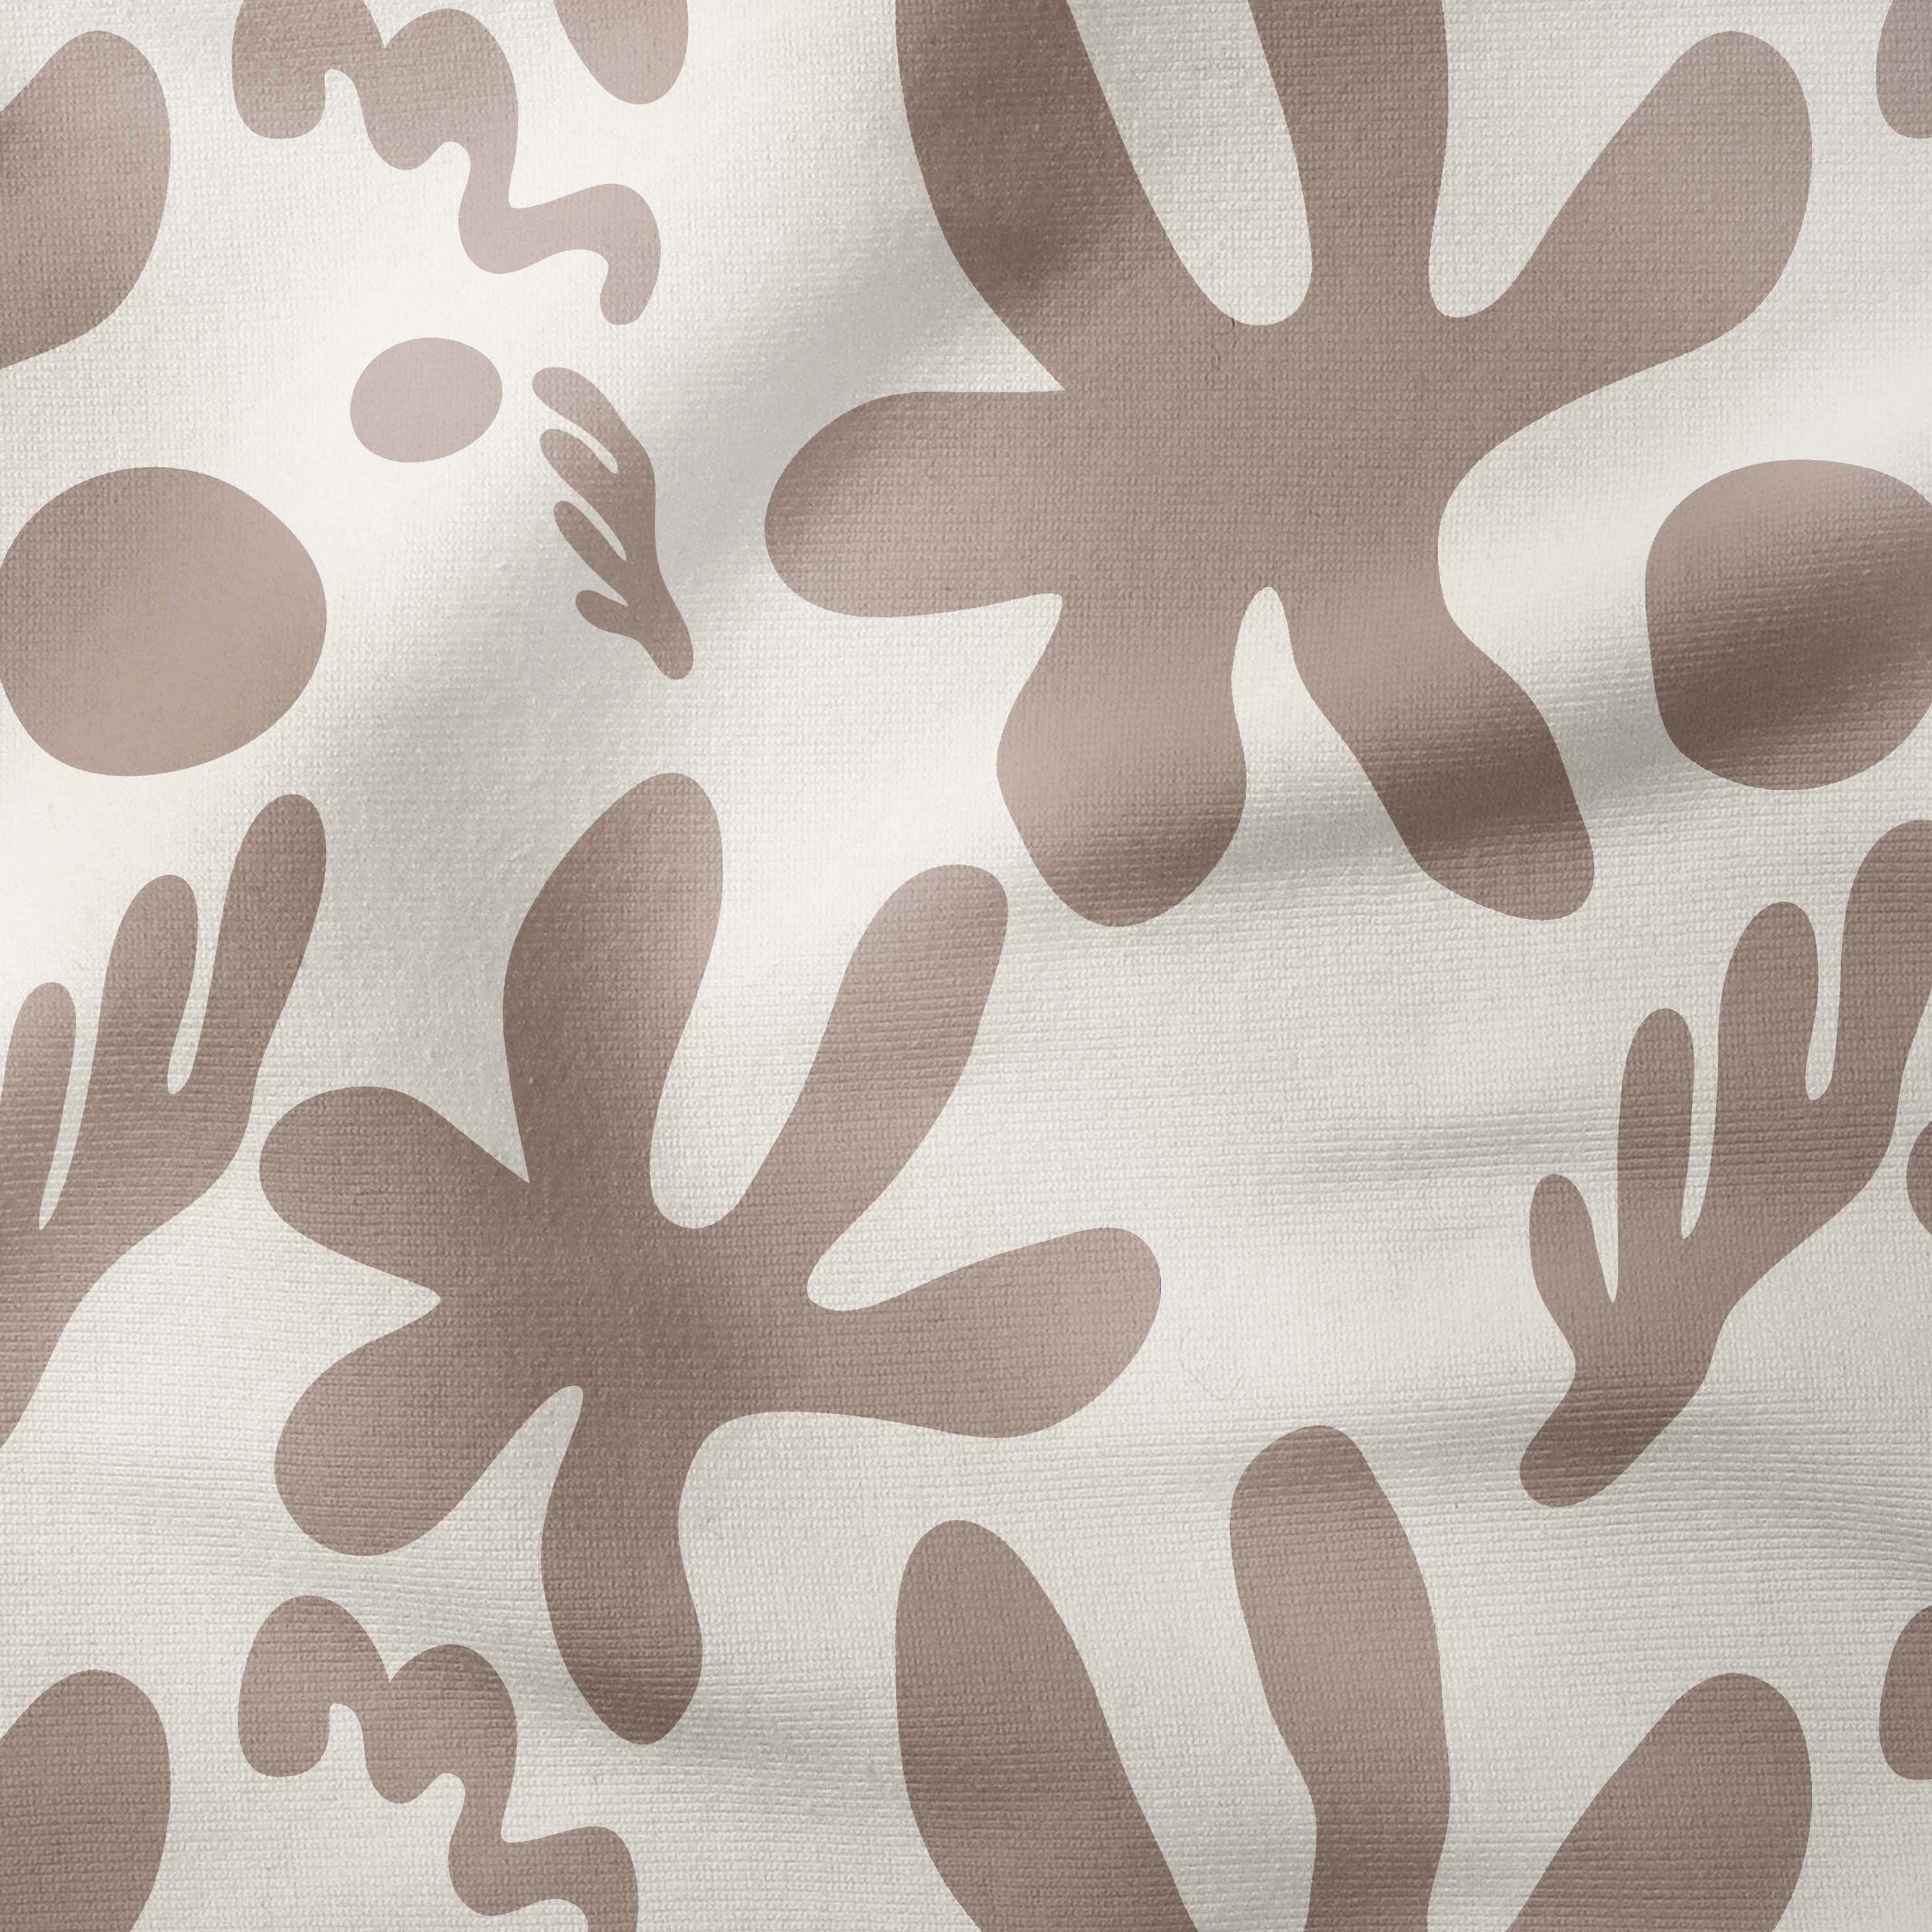 Abstract Flowers-Art Print Fabric-Melco Fabrics-Chocolate on Tofu-Cotton Poplin (110gsm)-Online-Fabric-Store-Australia